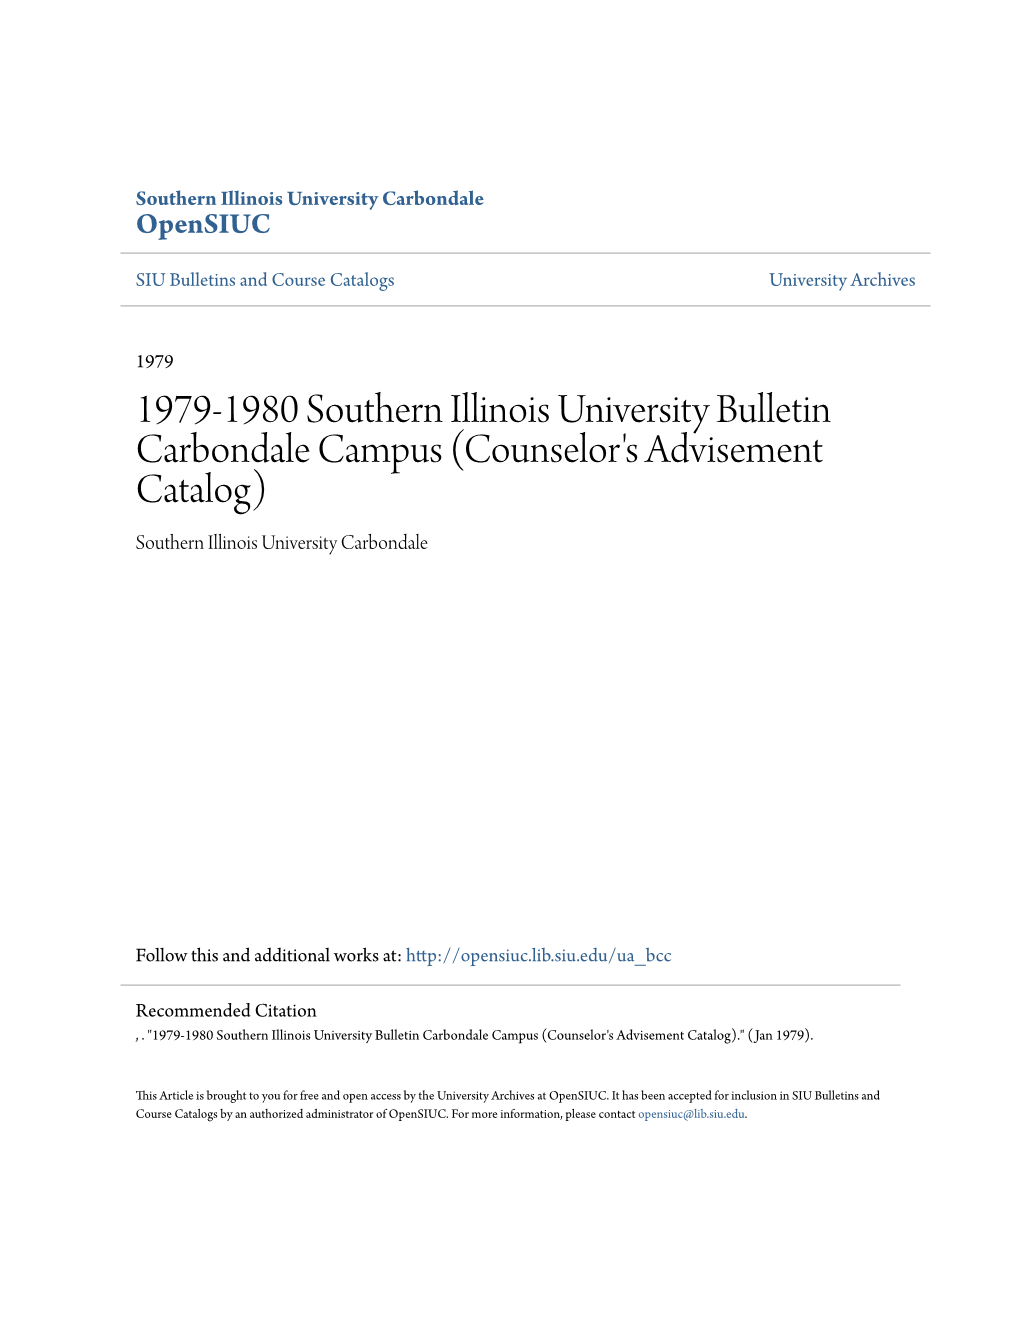 Counselor's Advisement Catalog) Southern Illinois University Carbondale